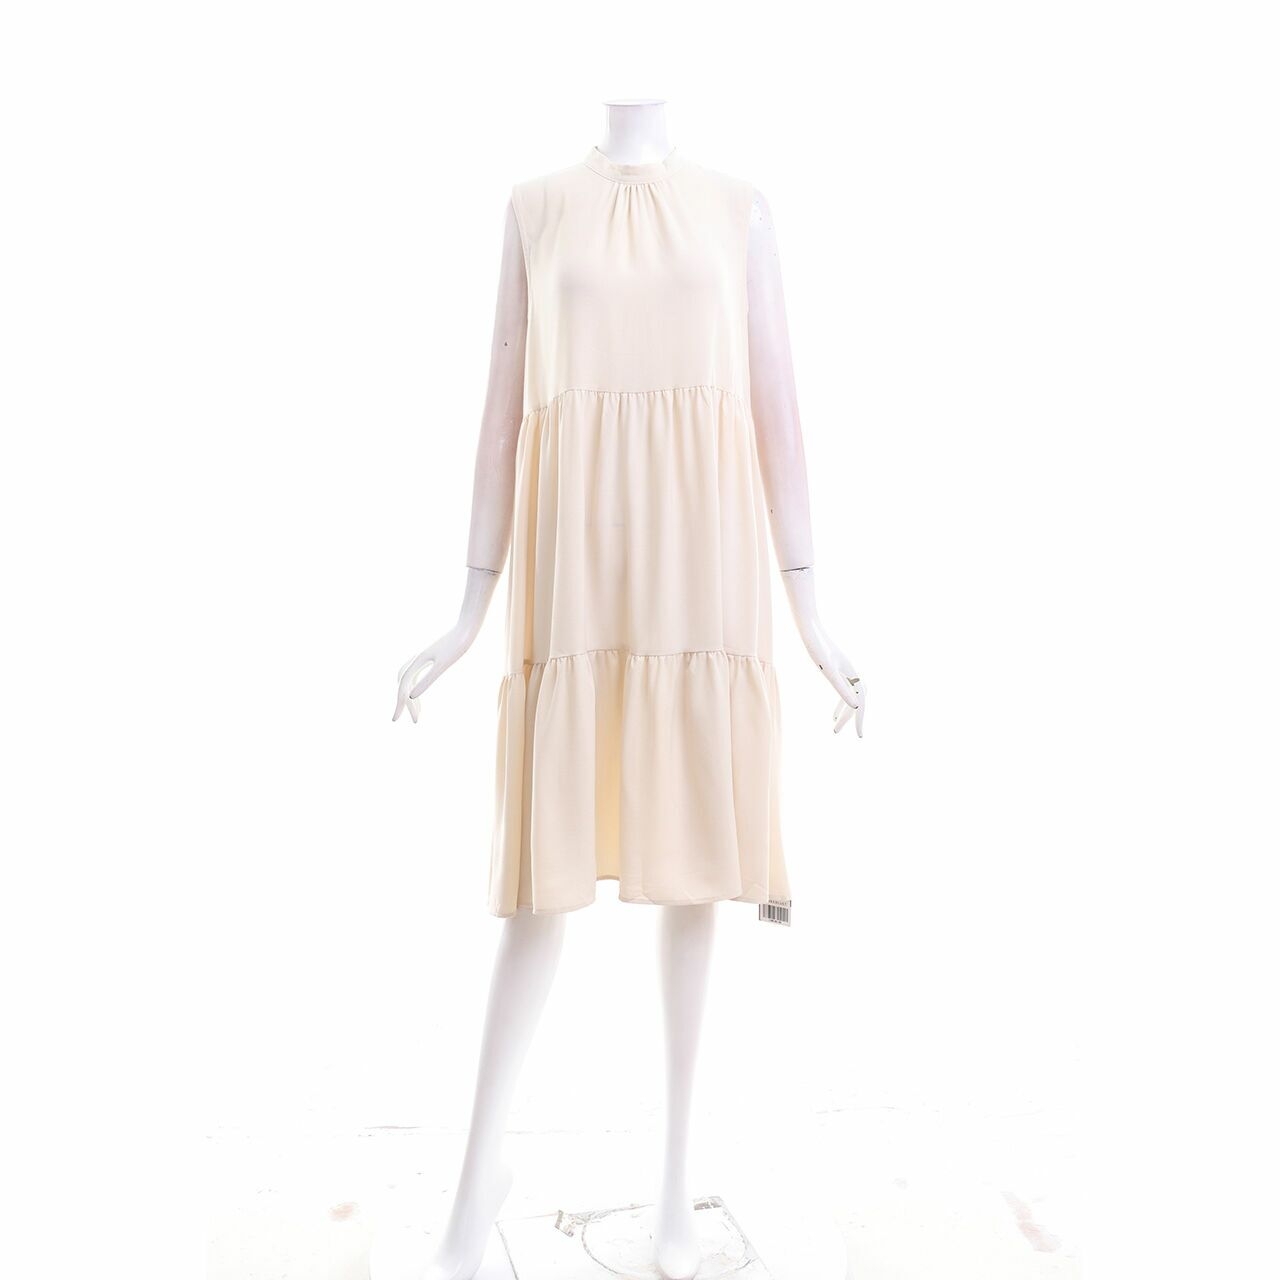 This is April Cream Midi Dress